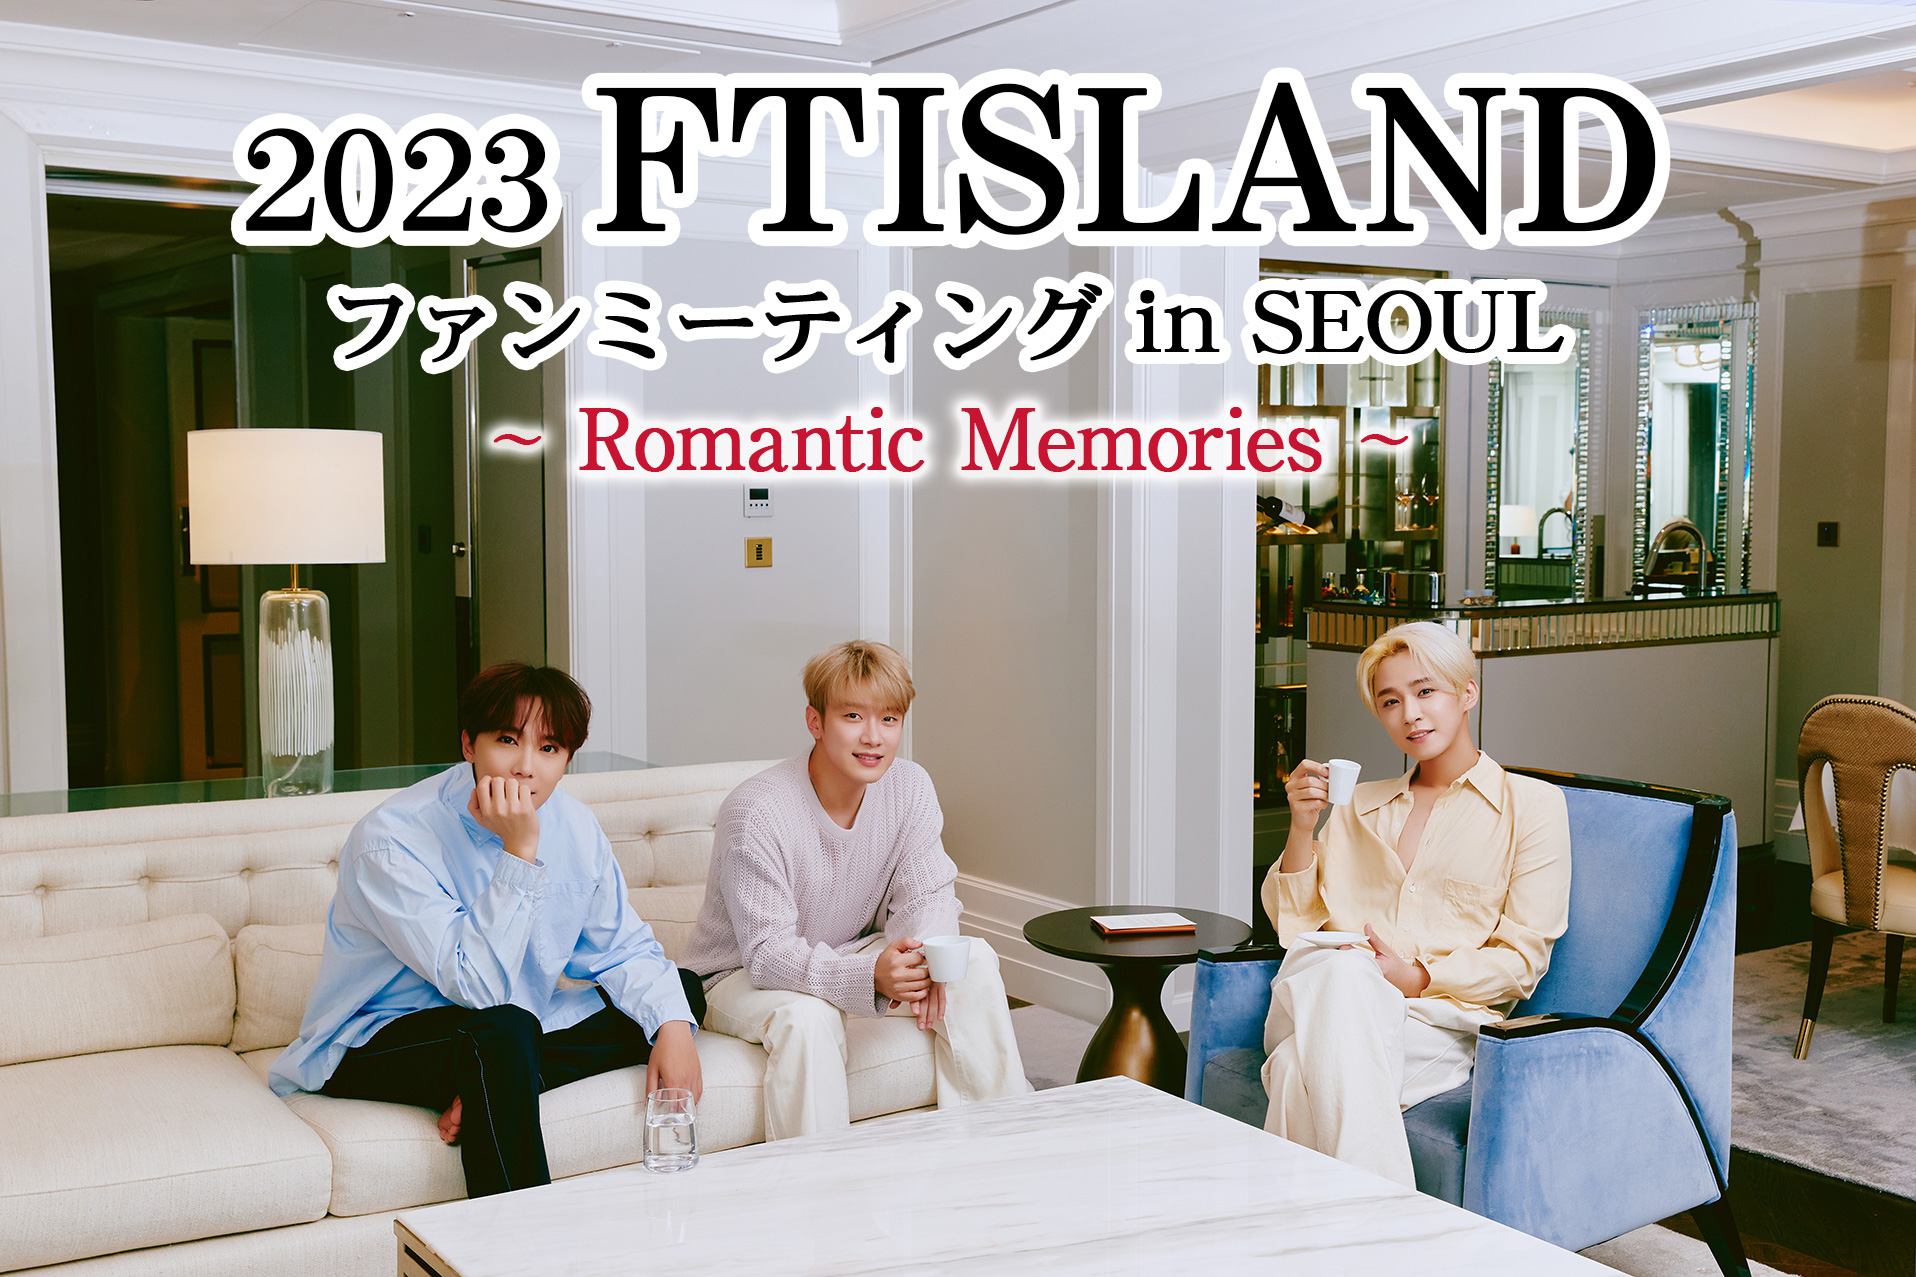 2023 FTISLAND ファンミーティング in SEOUL ～ Romantic Memories ～